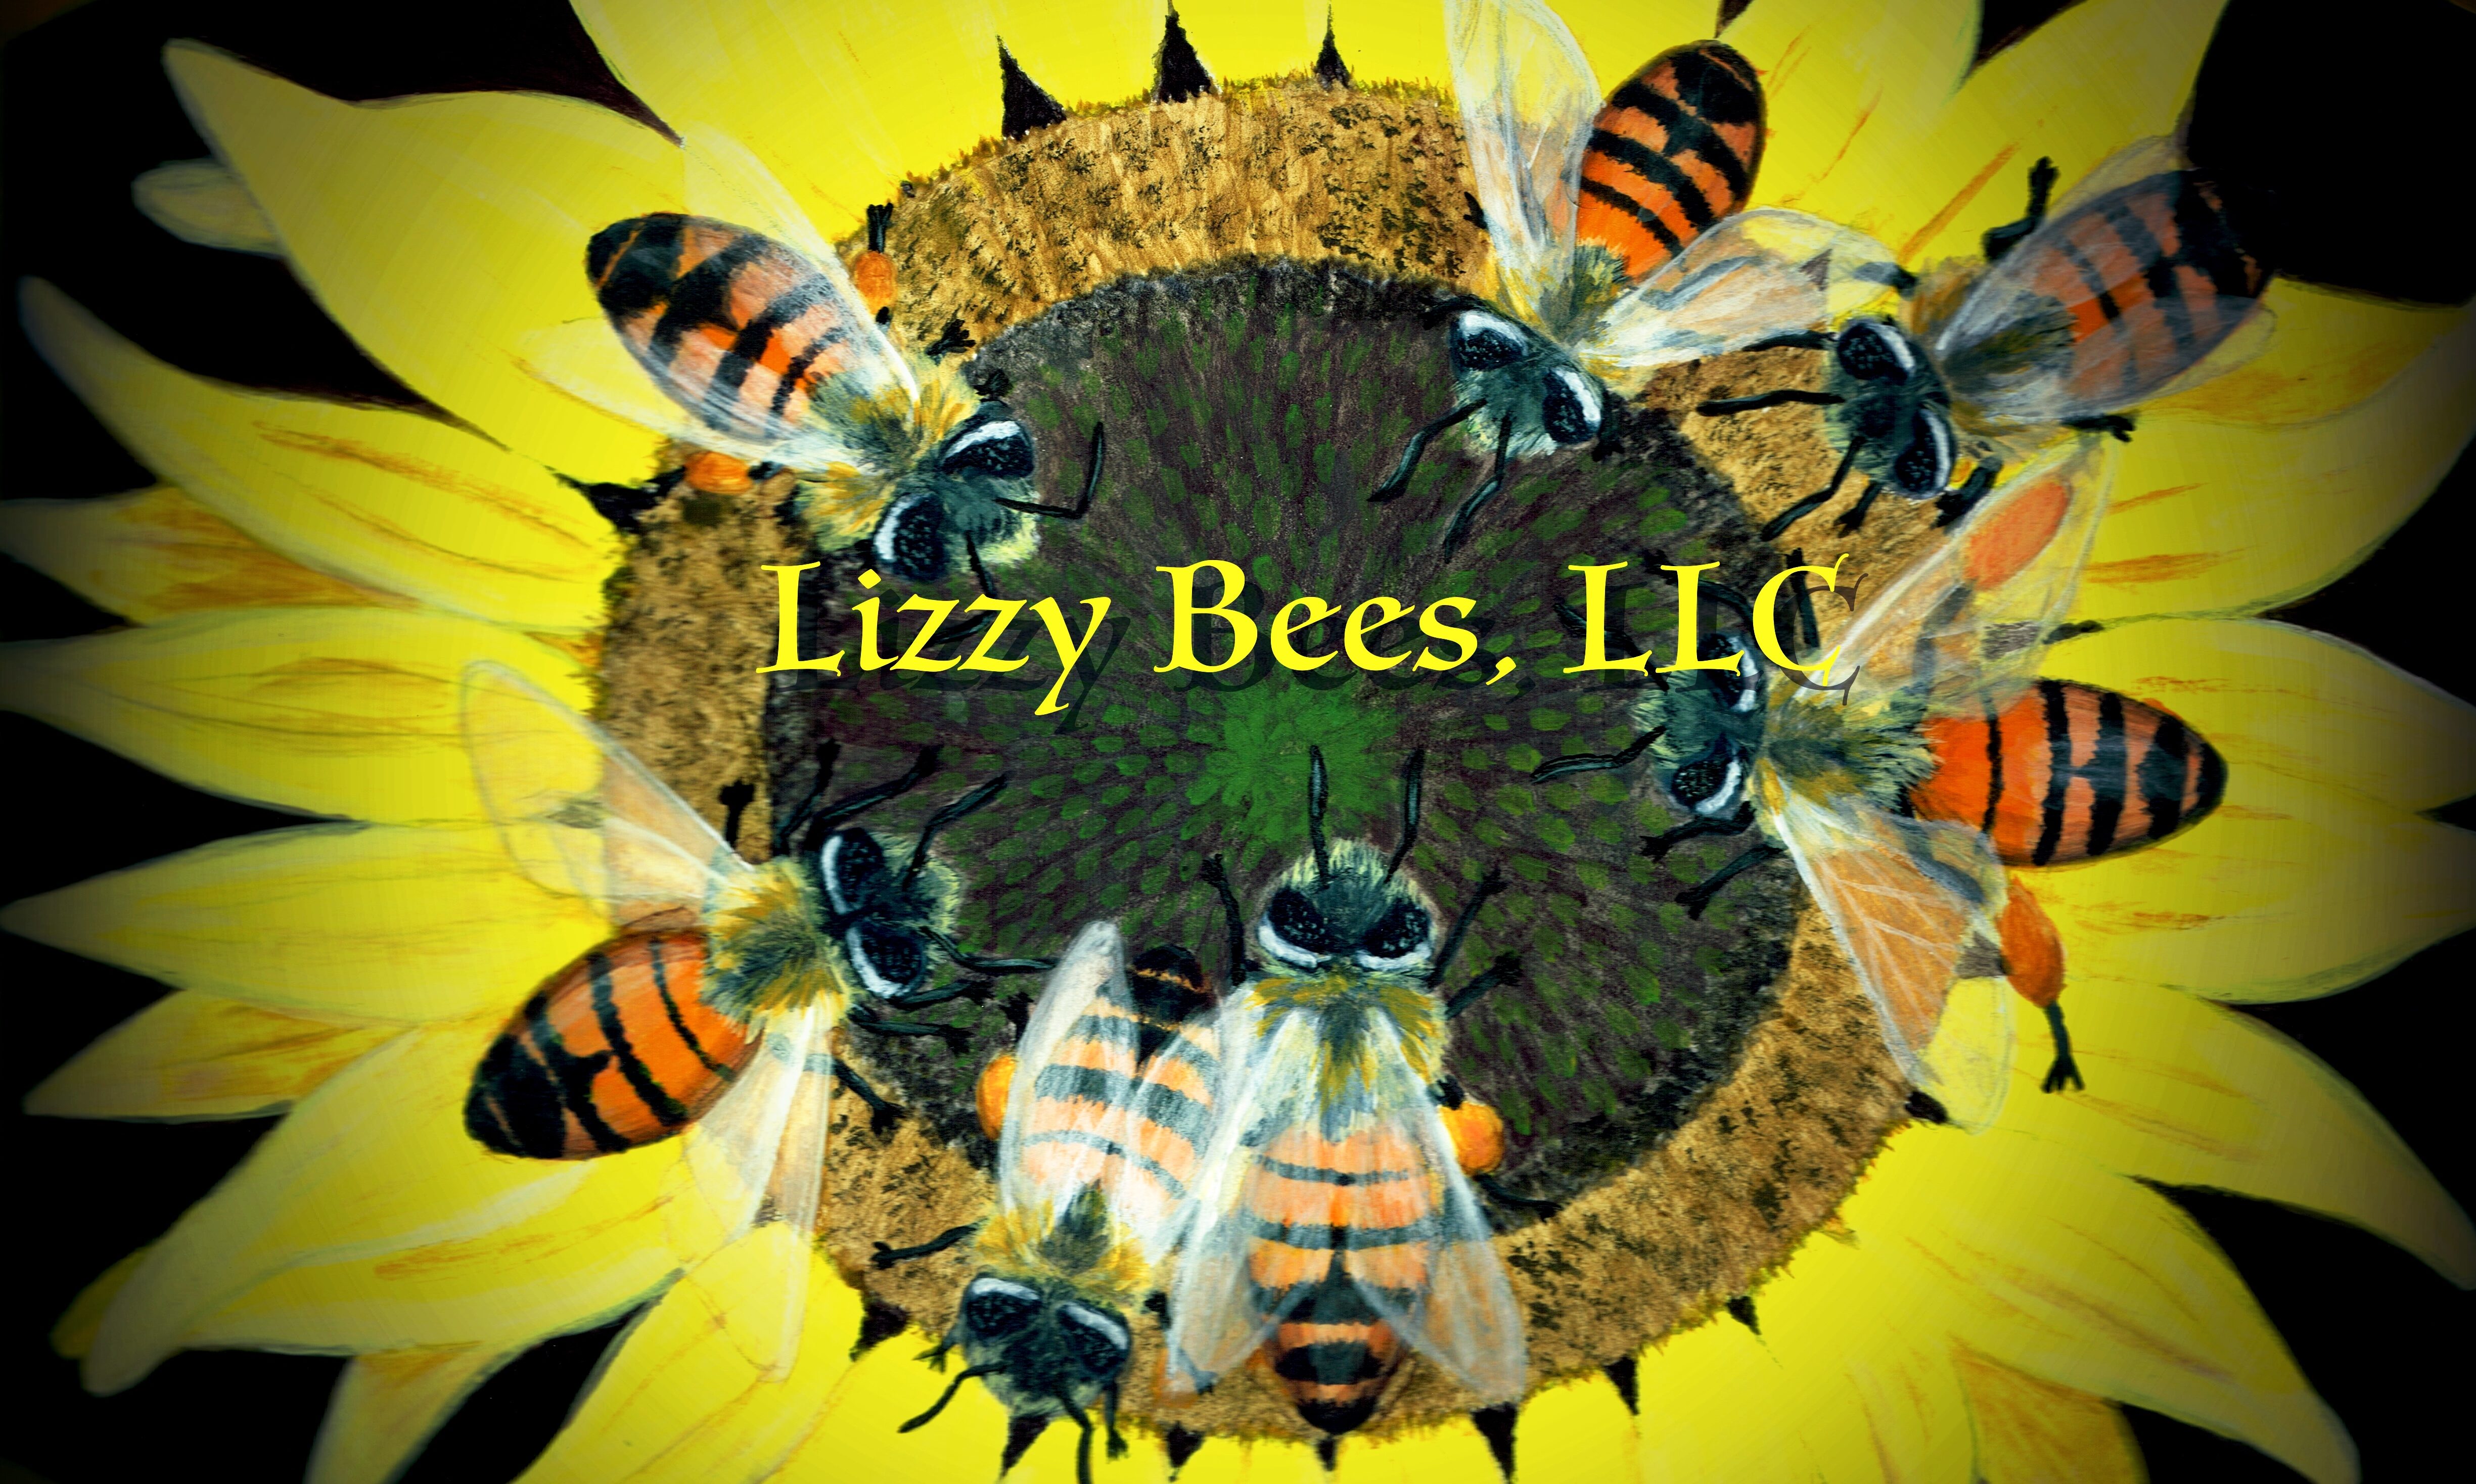 Lizzy Bees LLC